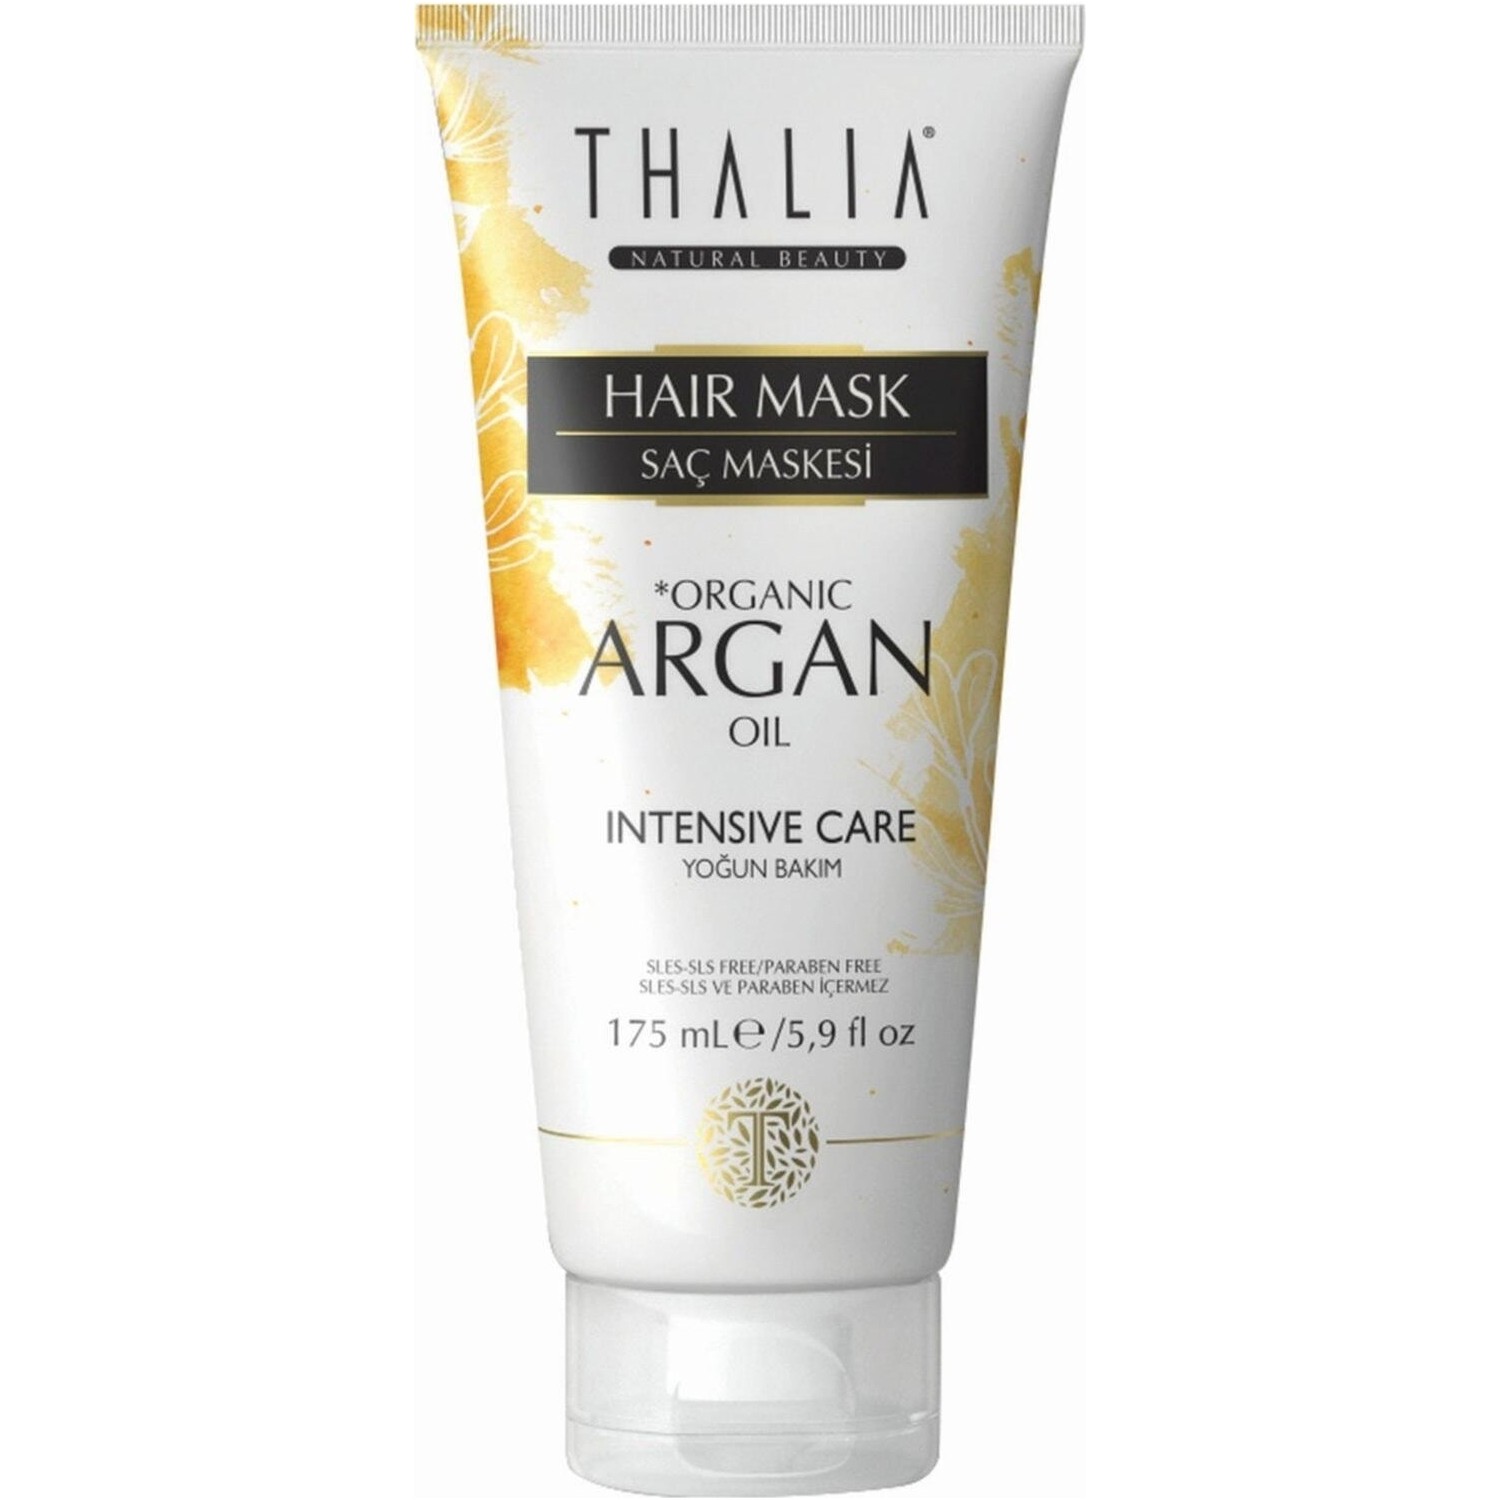 Увлажняющая маска Thalia Organic Argan Oil для волос, 175 мл